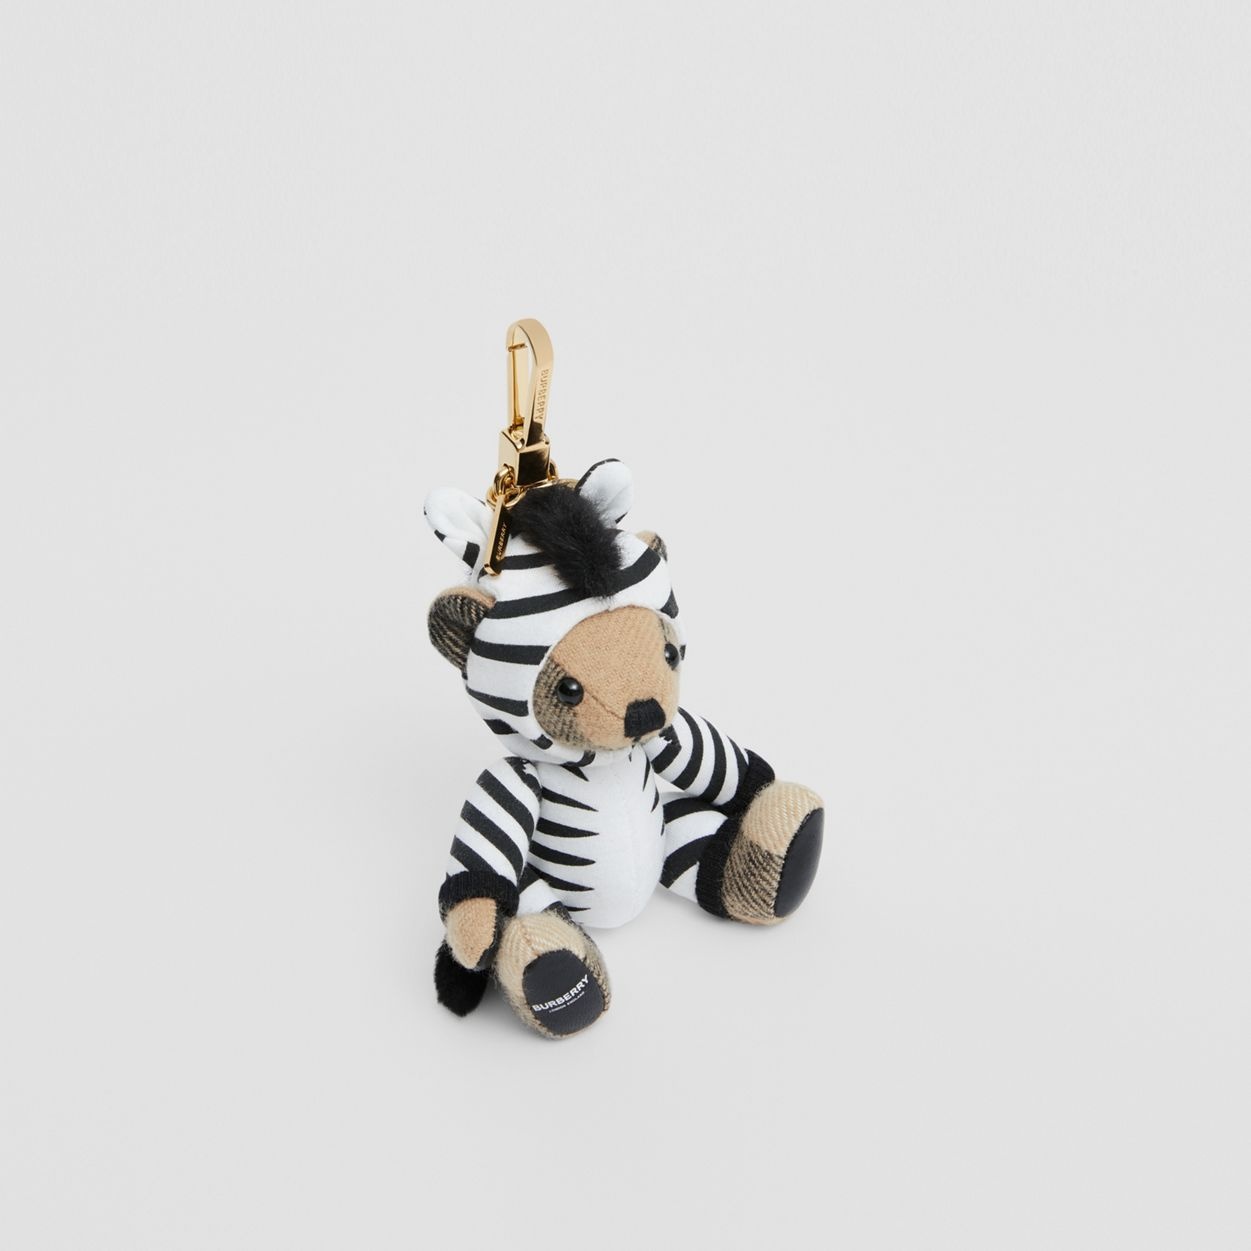 Thomas Bear Charm in Zebra Costume - 1